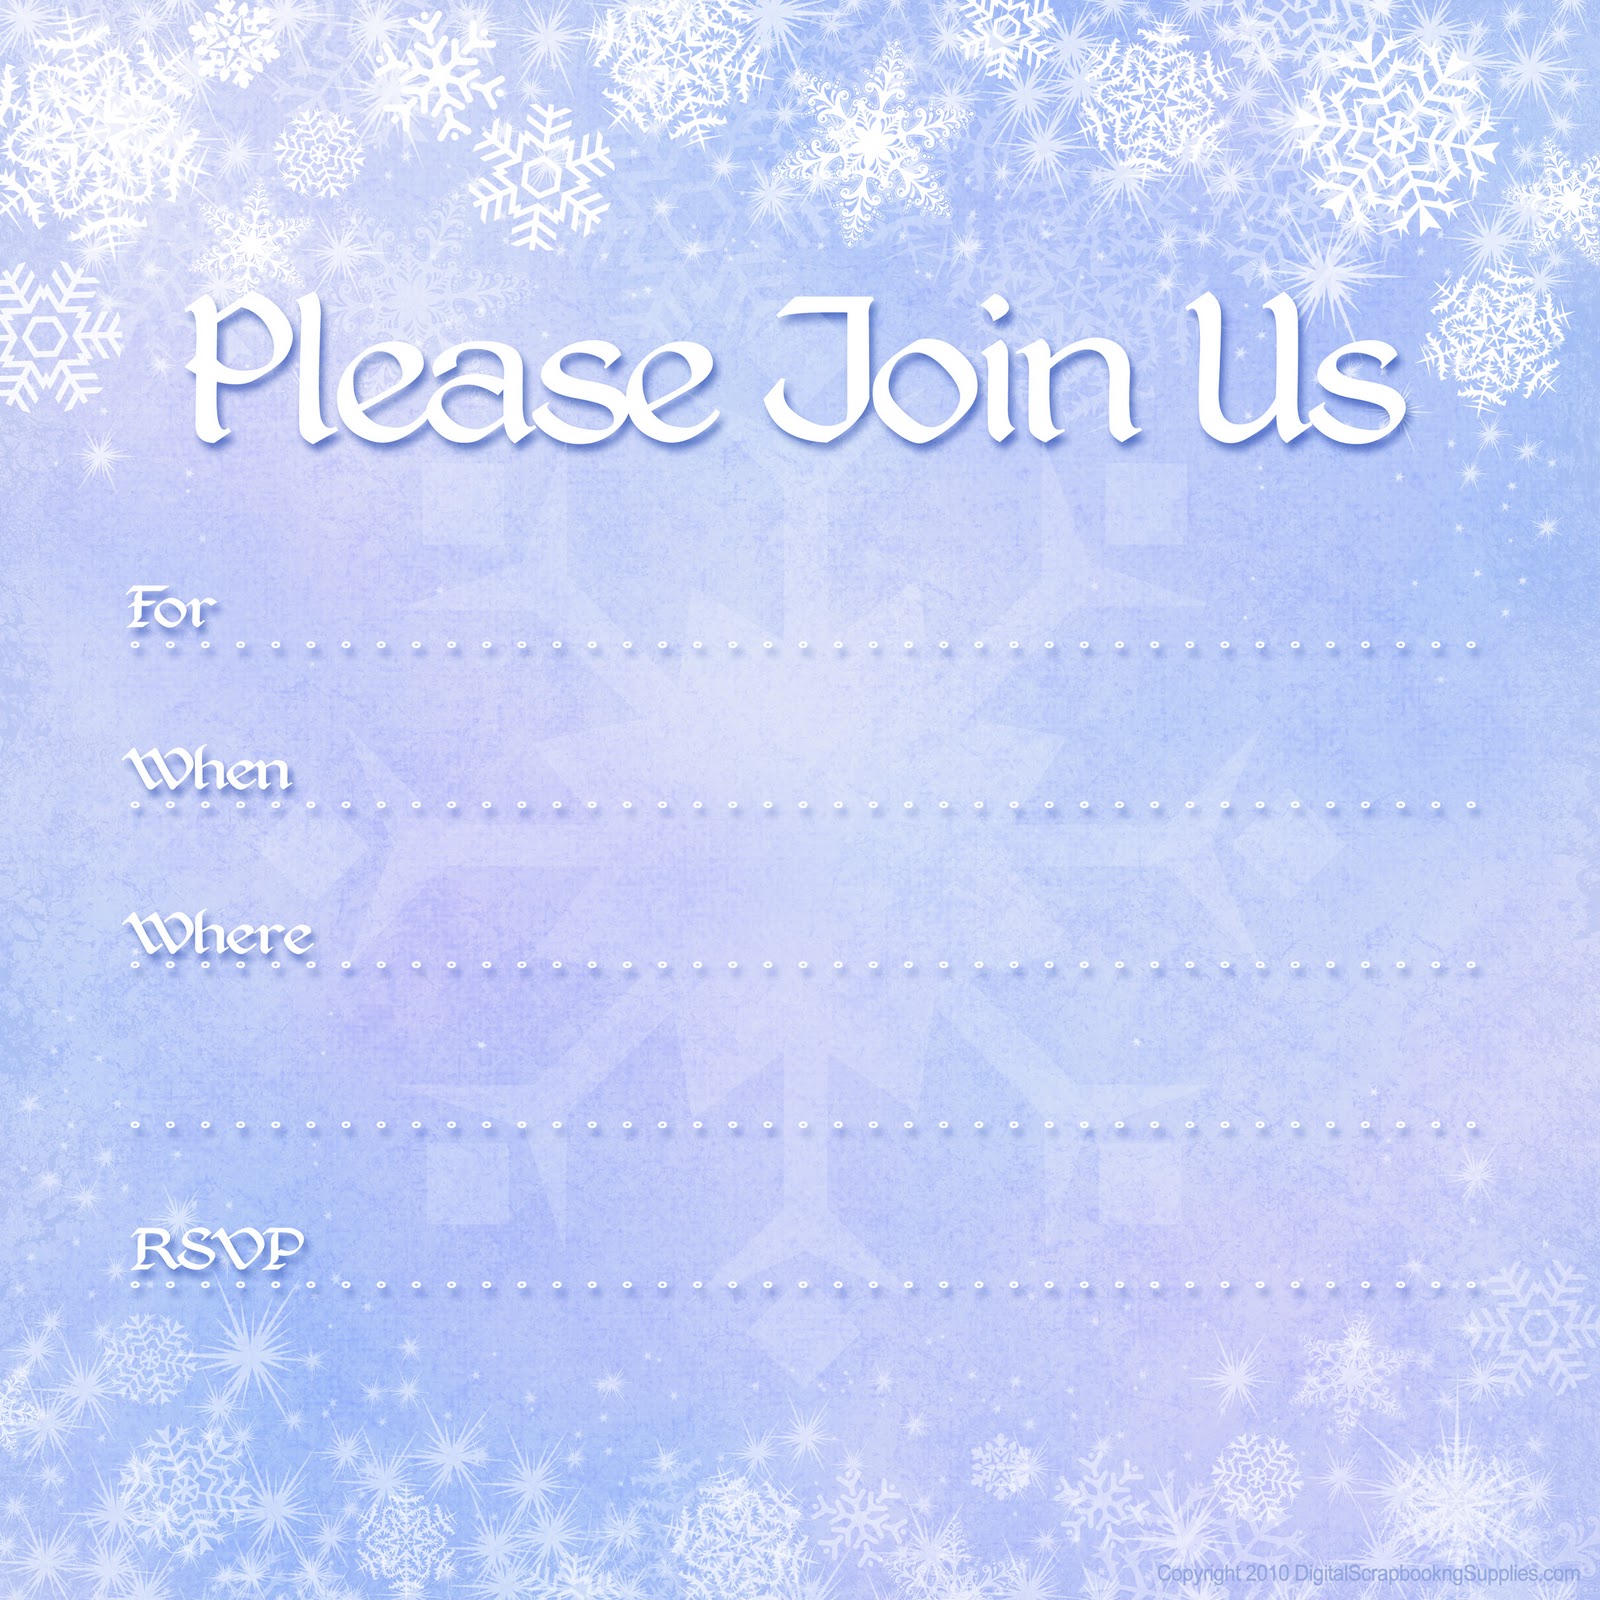 Free Printable Party Invitations: Free Winter Holiday Invitations